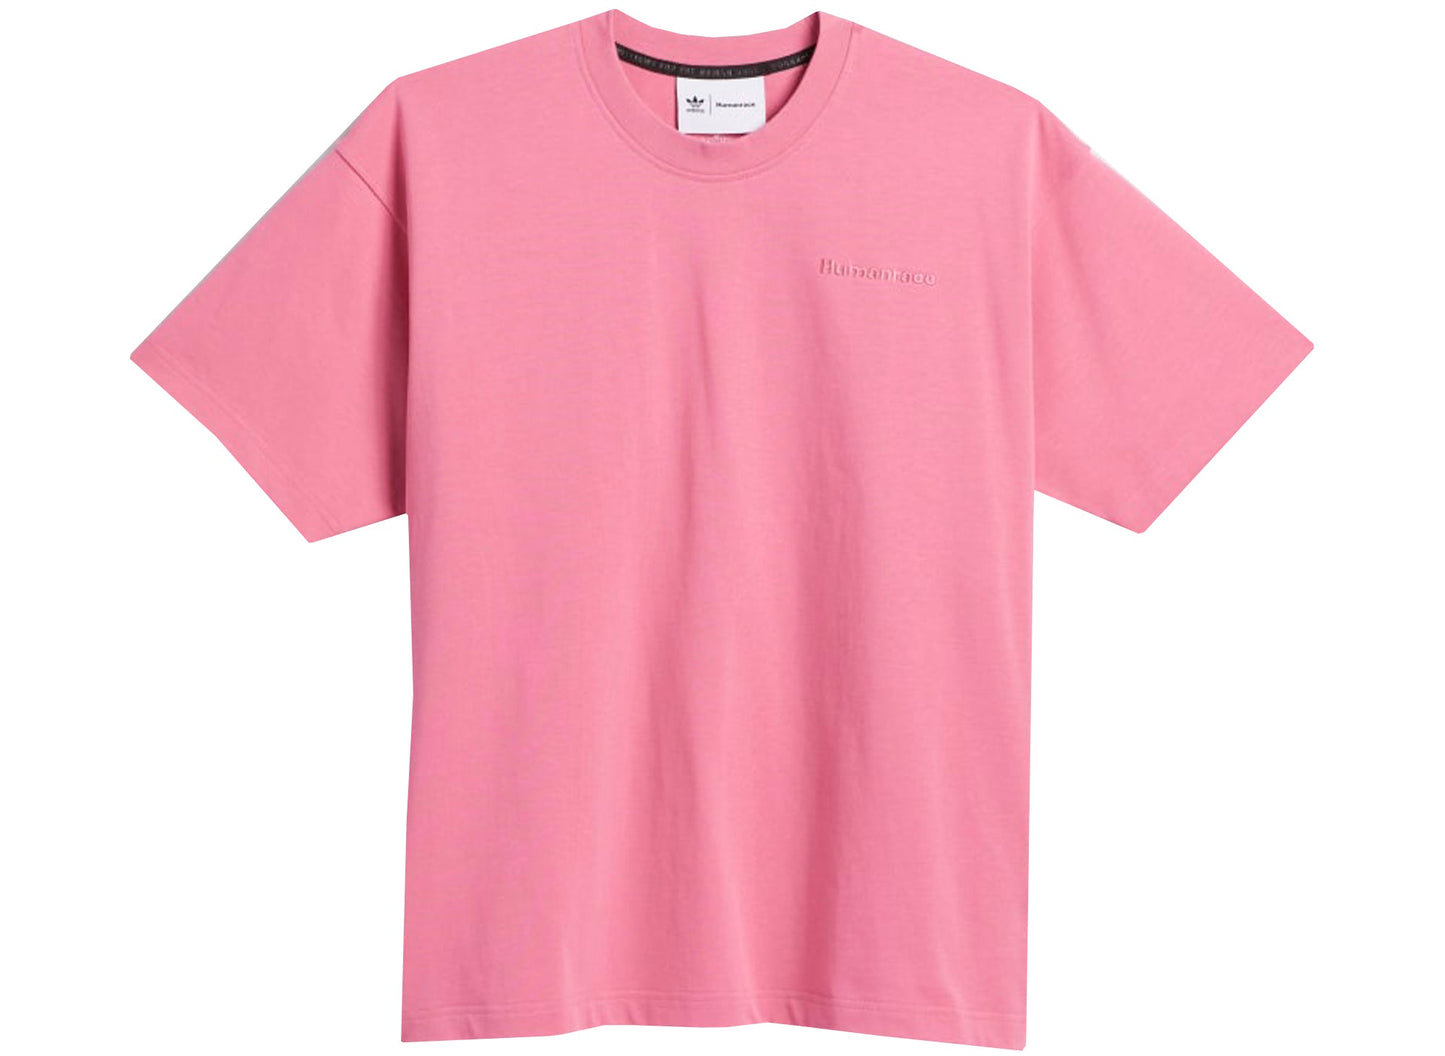 Adidas Pharrell Williams Basics Shirt in Pink